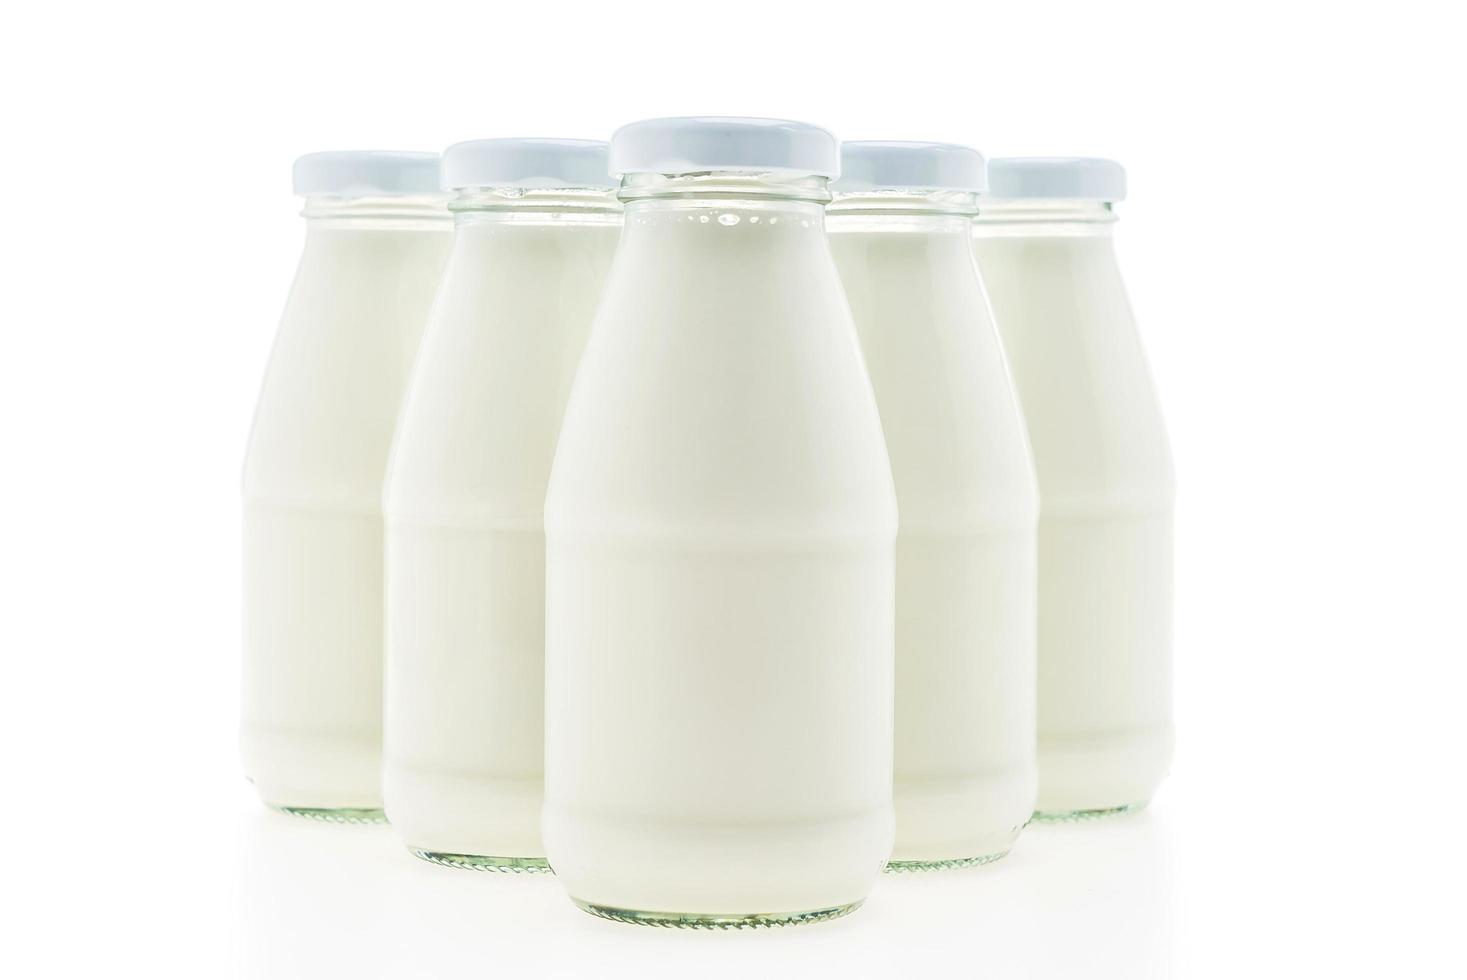 copo de garrafa de leite isolado no fundo branco foto